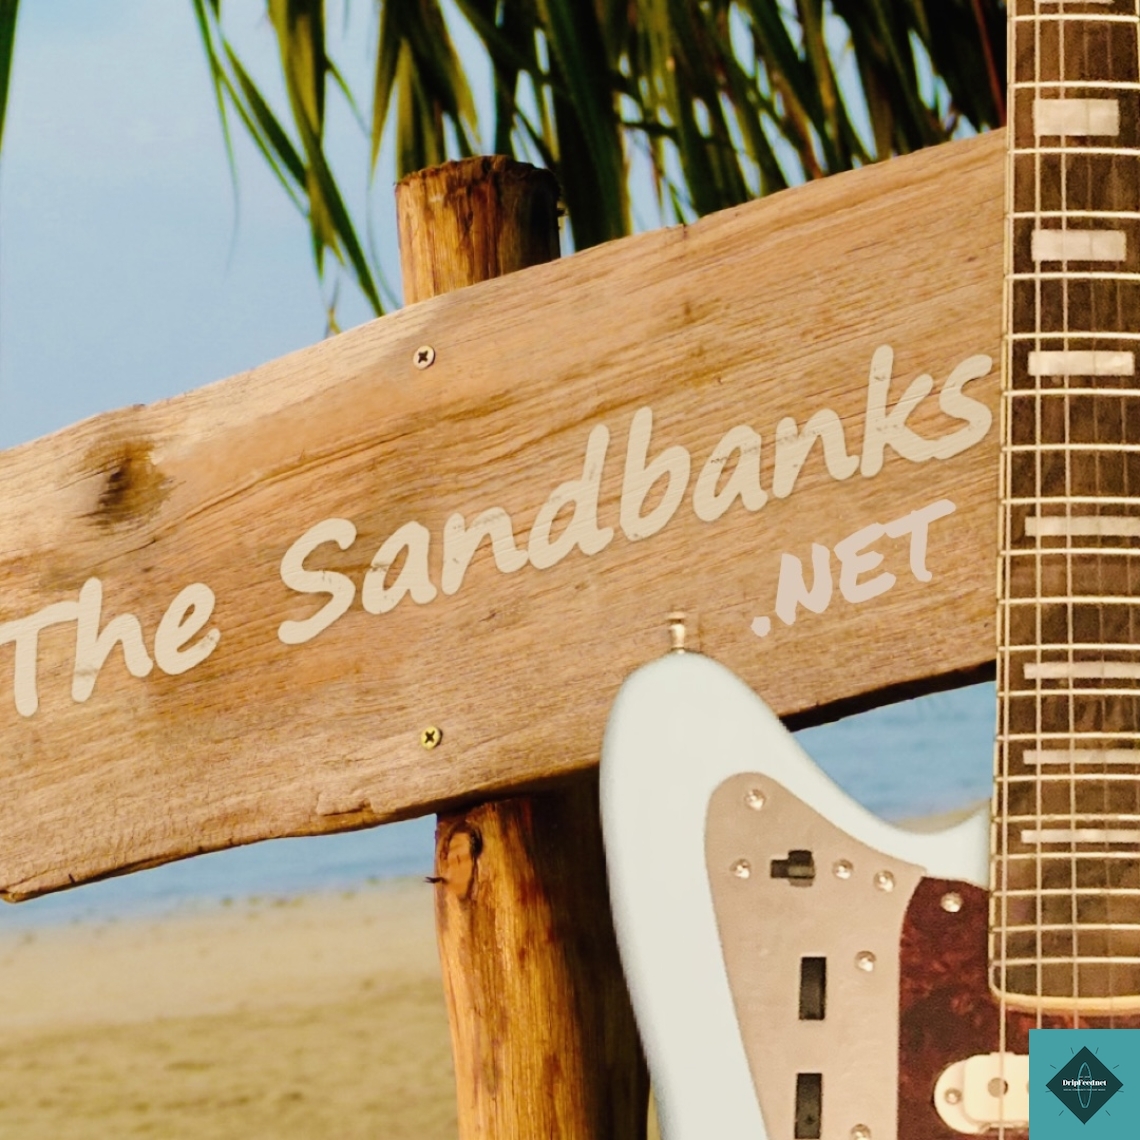 The Sandbanks